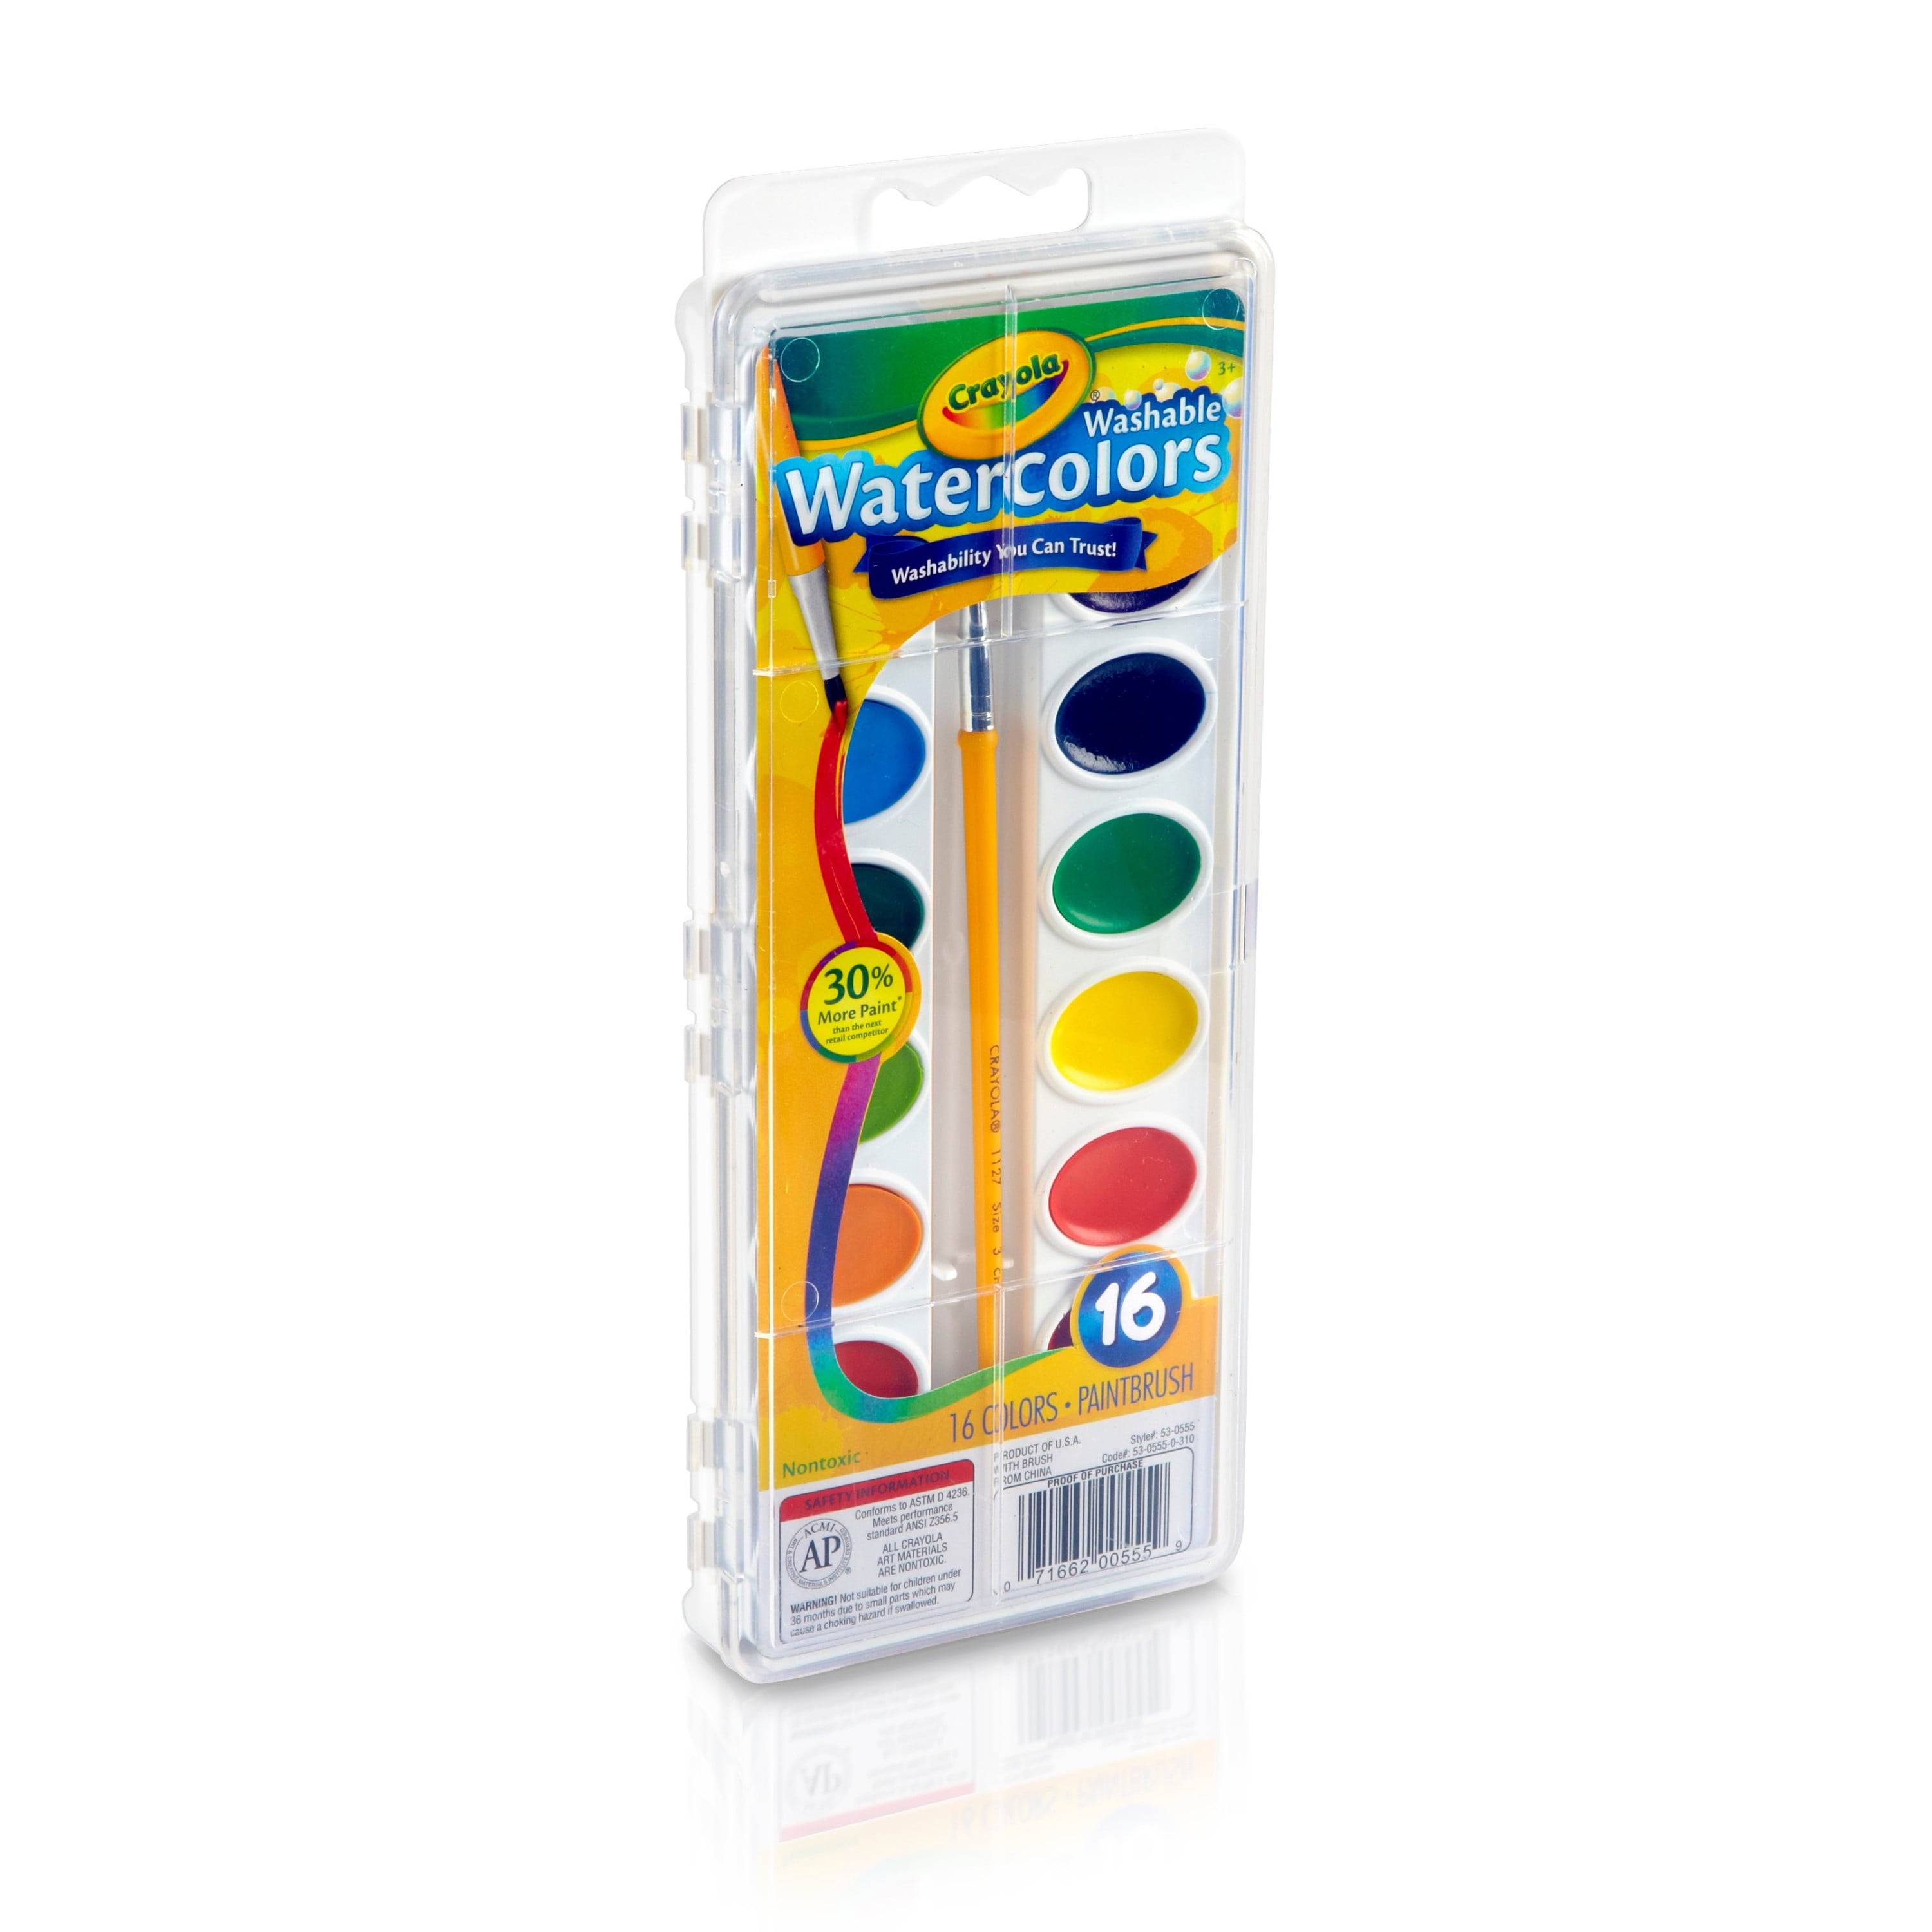 Crayola Washable Watercolor Paint Set - 16 Colors